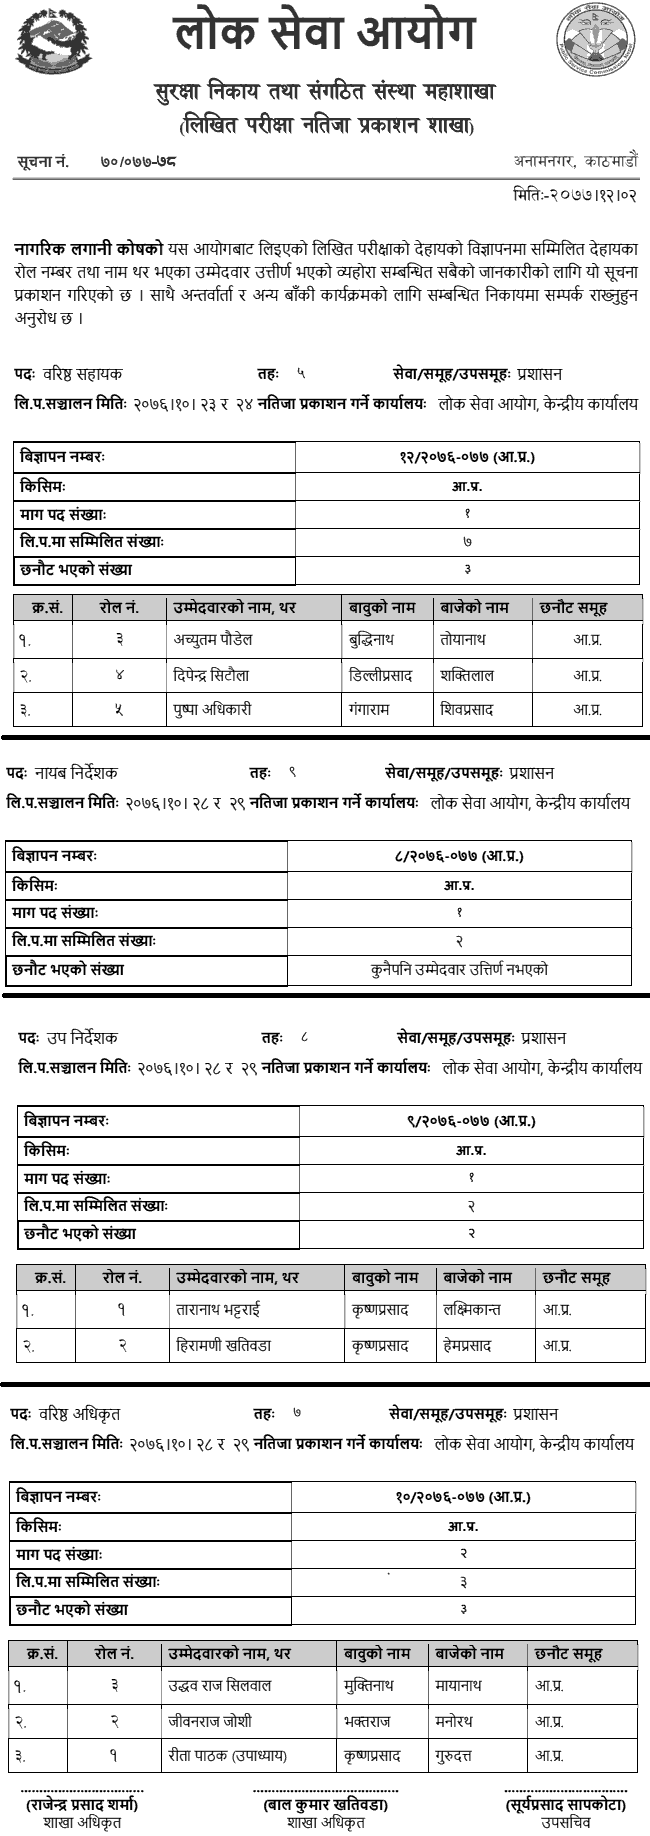 Nagarik Lagani Kosh Written Examination Result of 5th, 7th, 8th and 9th Level